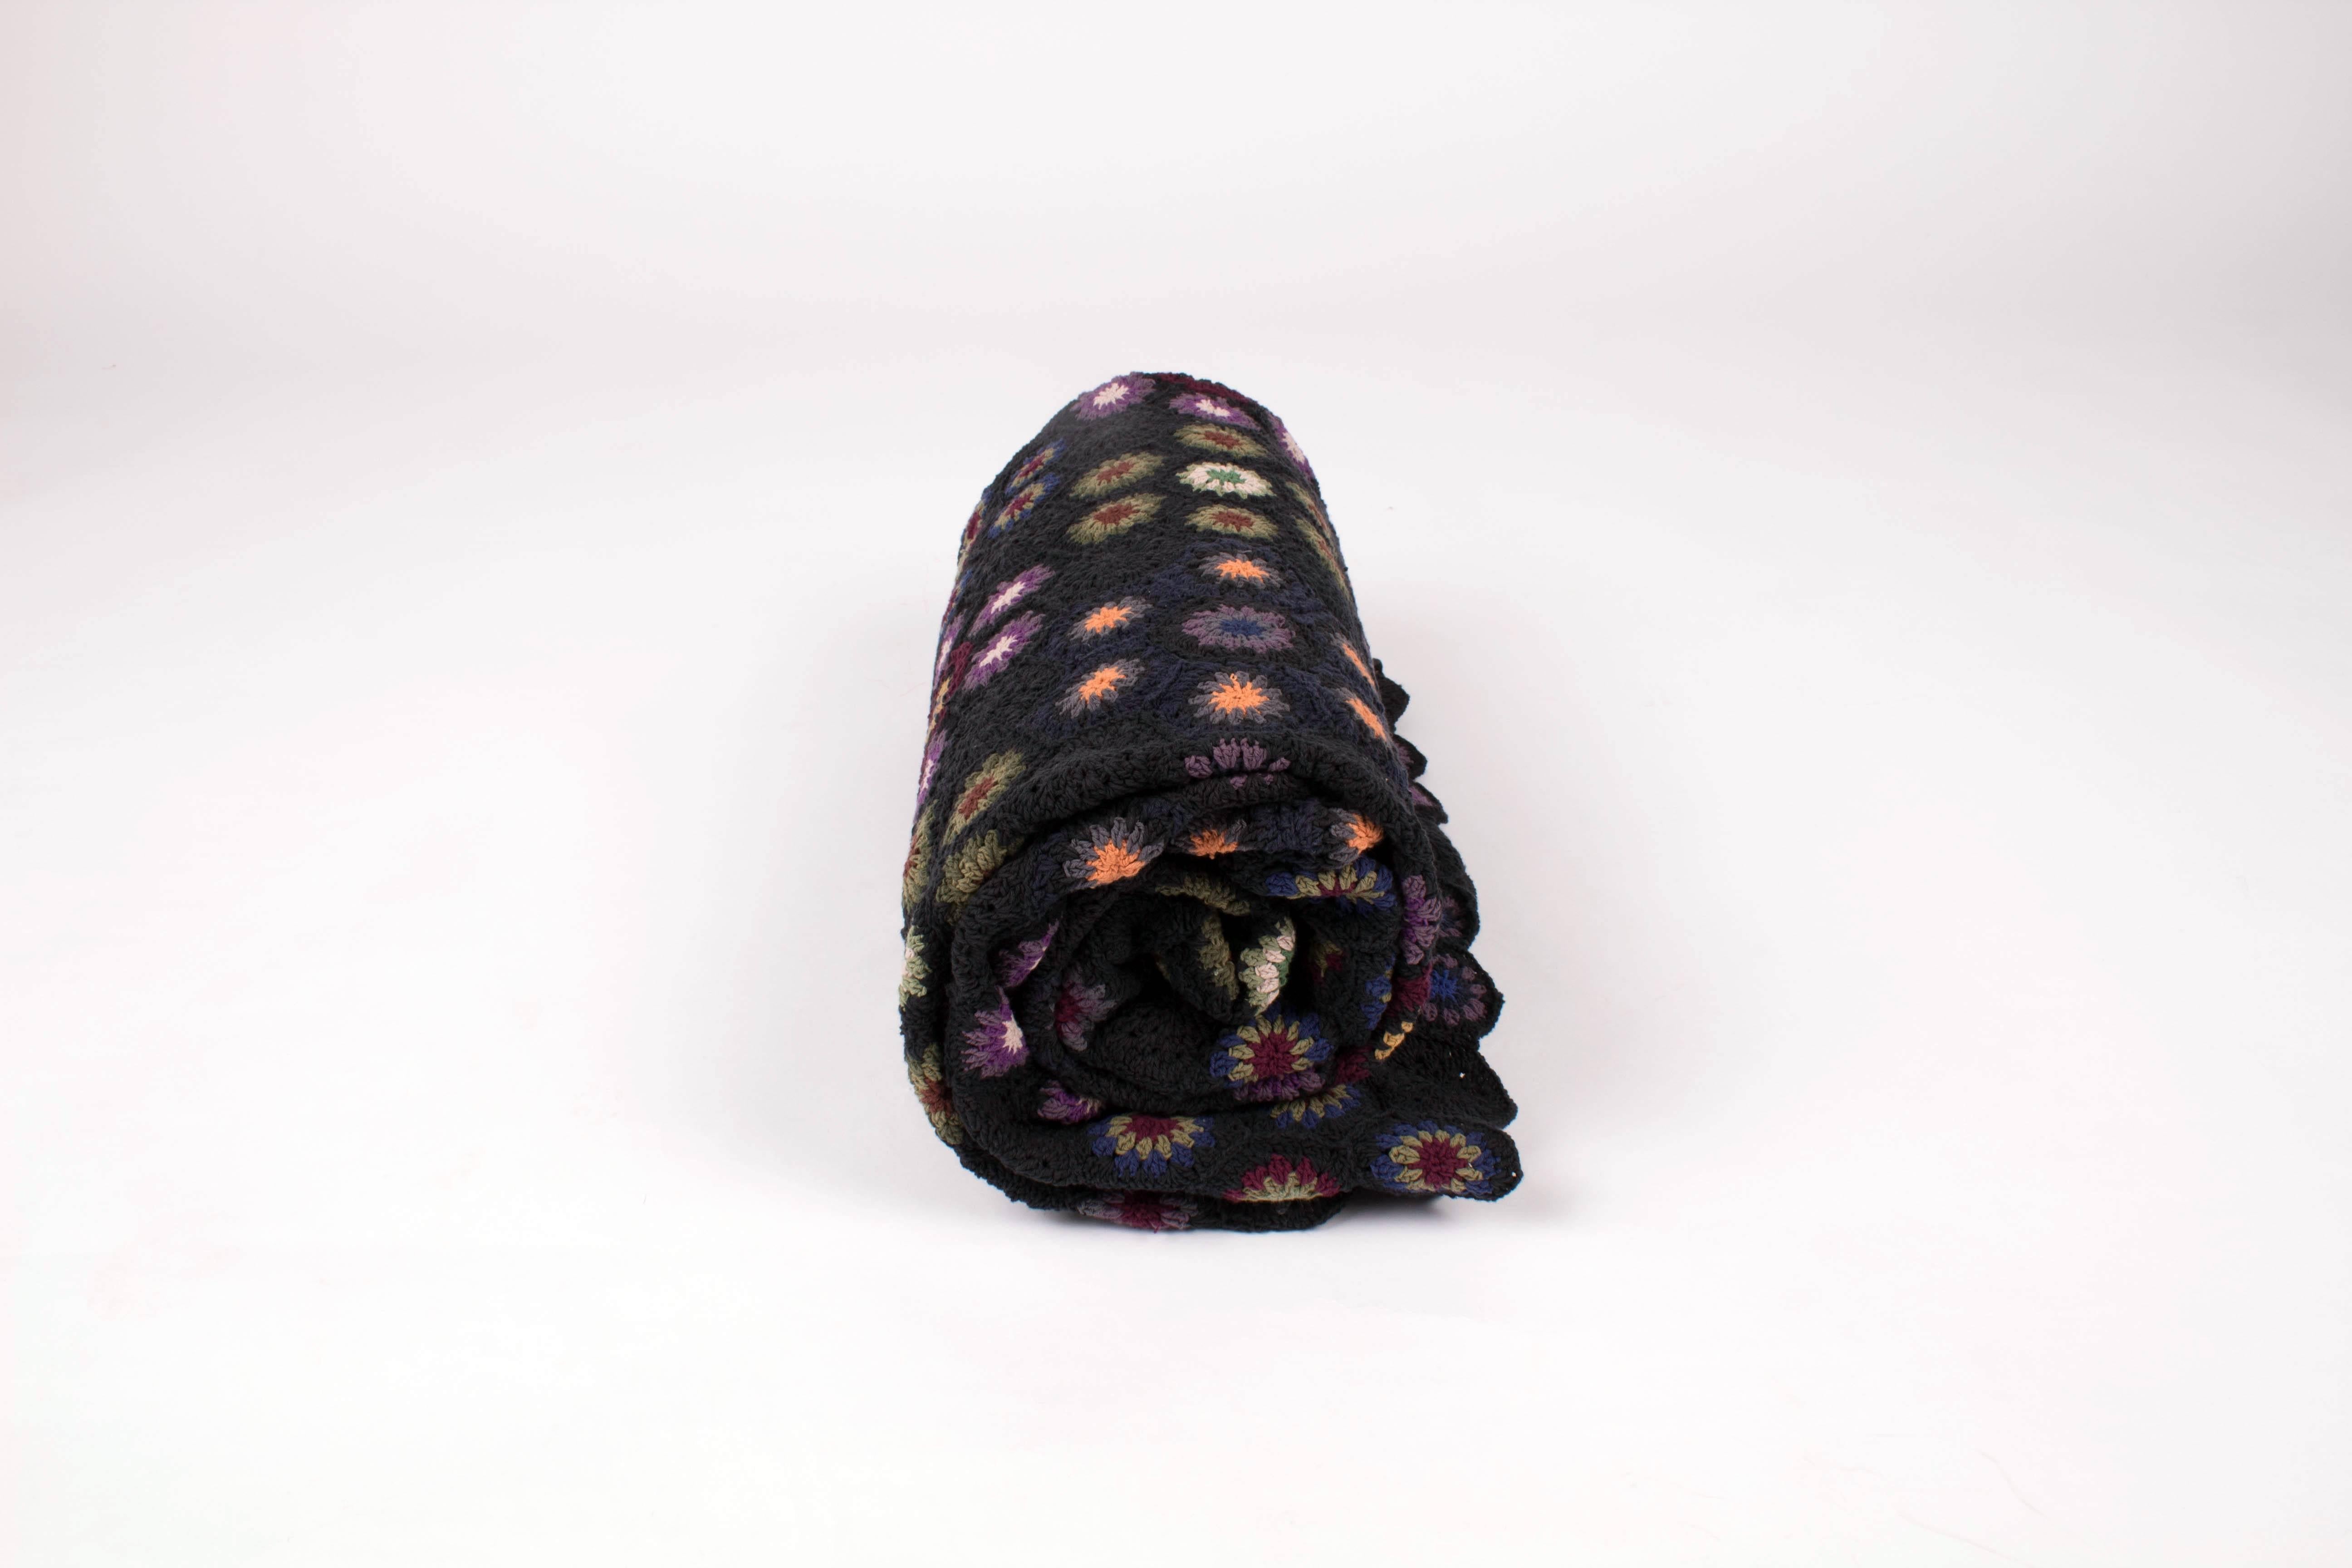 Crocheted medallion blanket designed by Kokon to Zai.